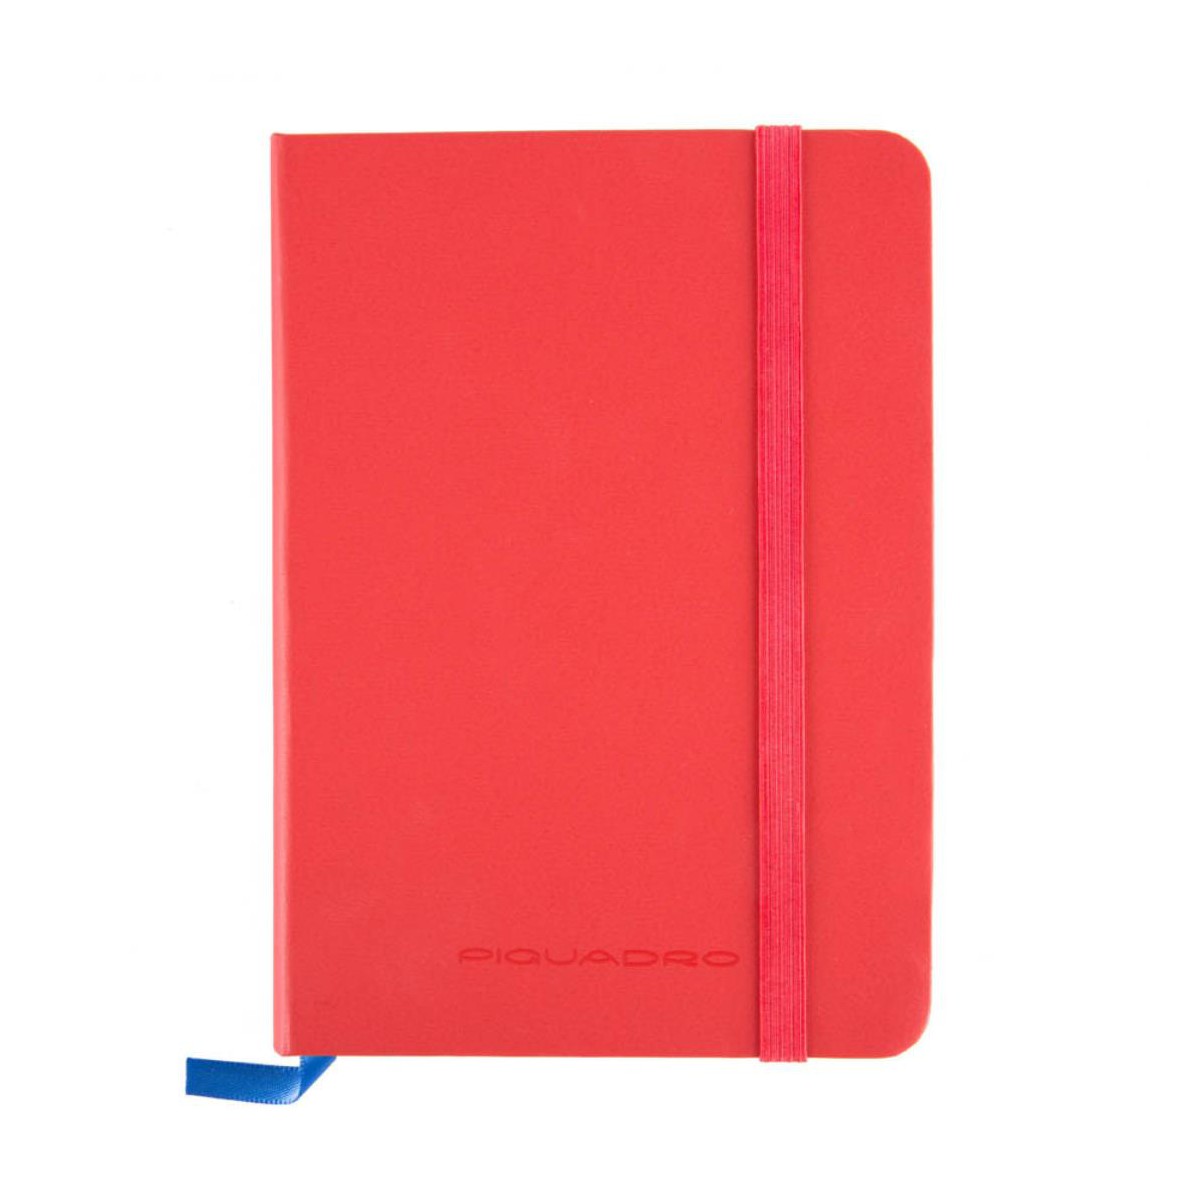 PIQUADRO quaderno notes a righe, formato A6, datario, rosso